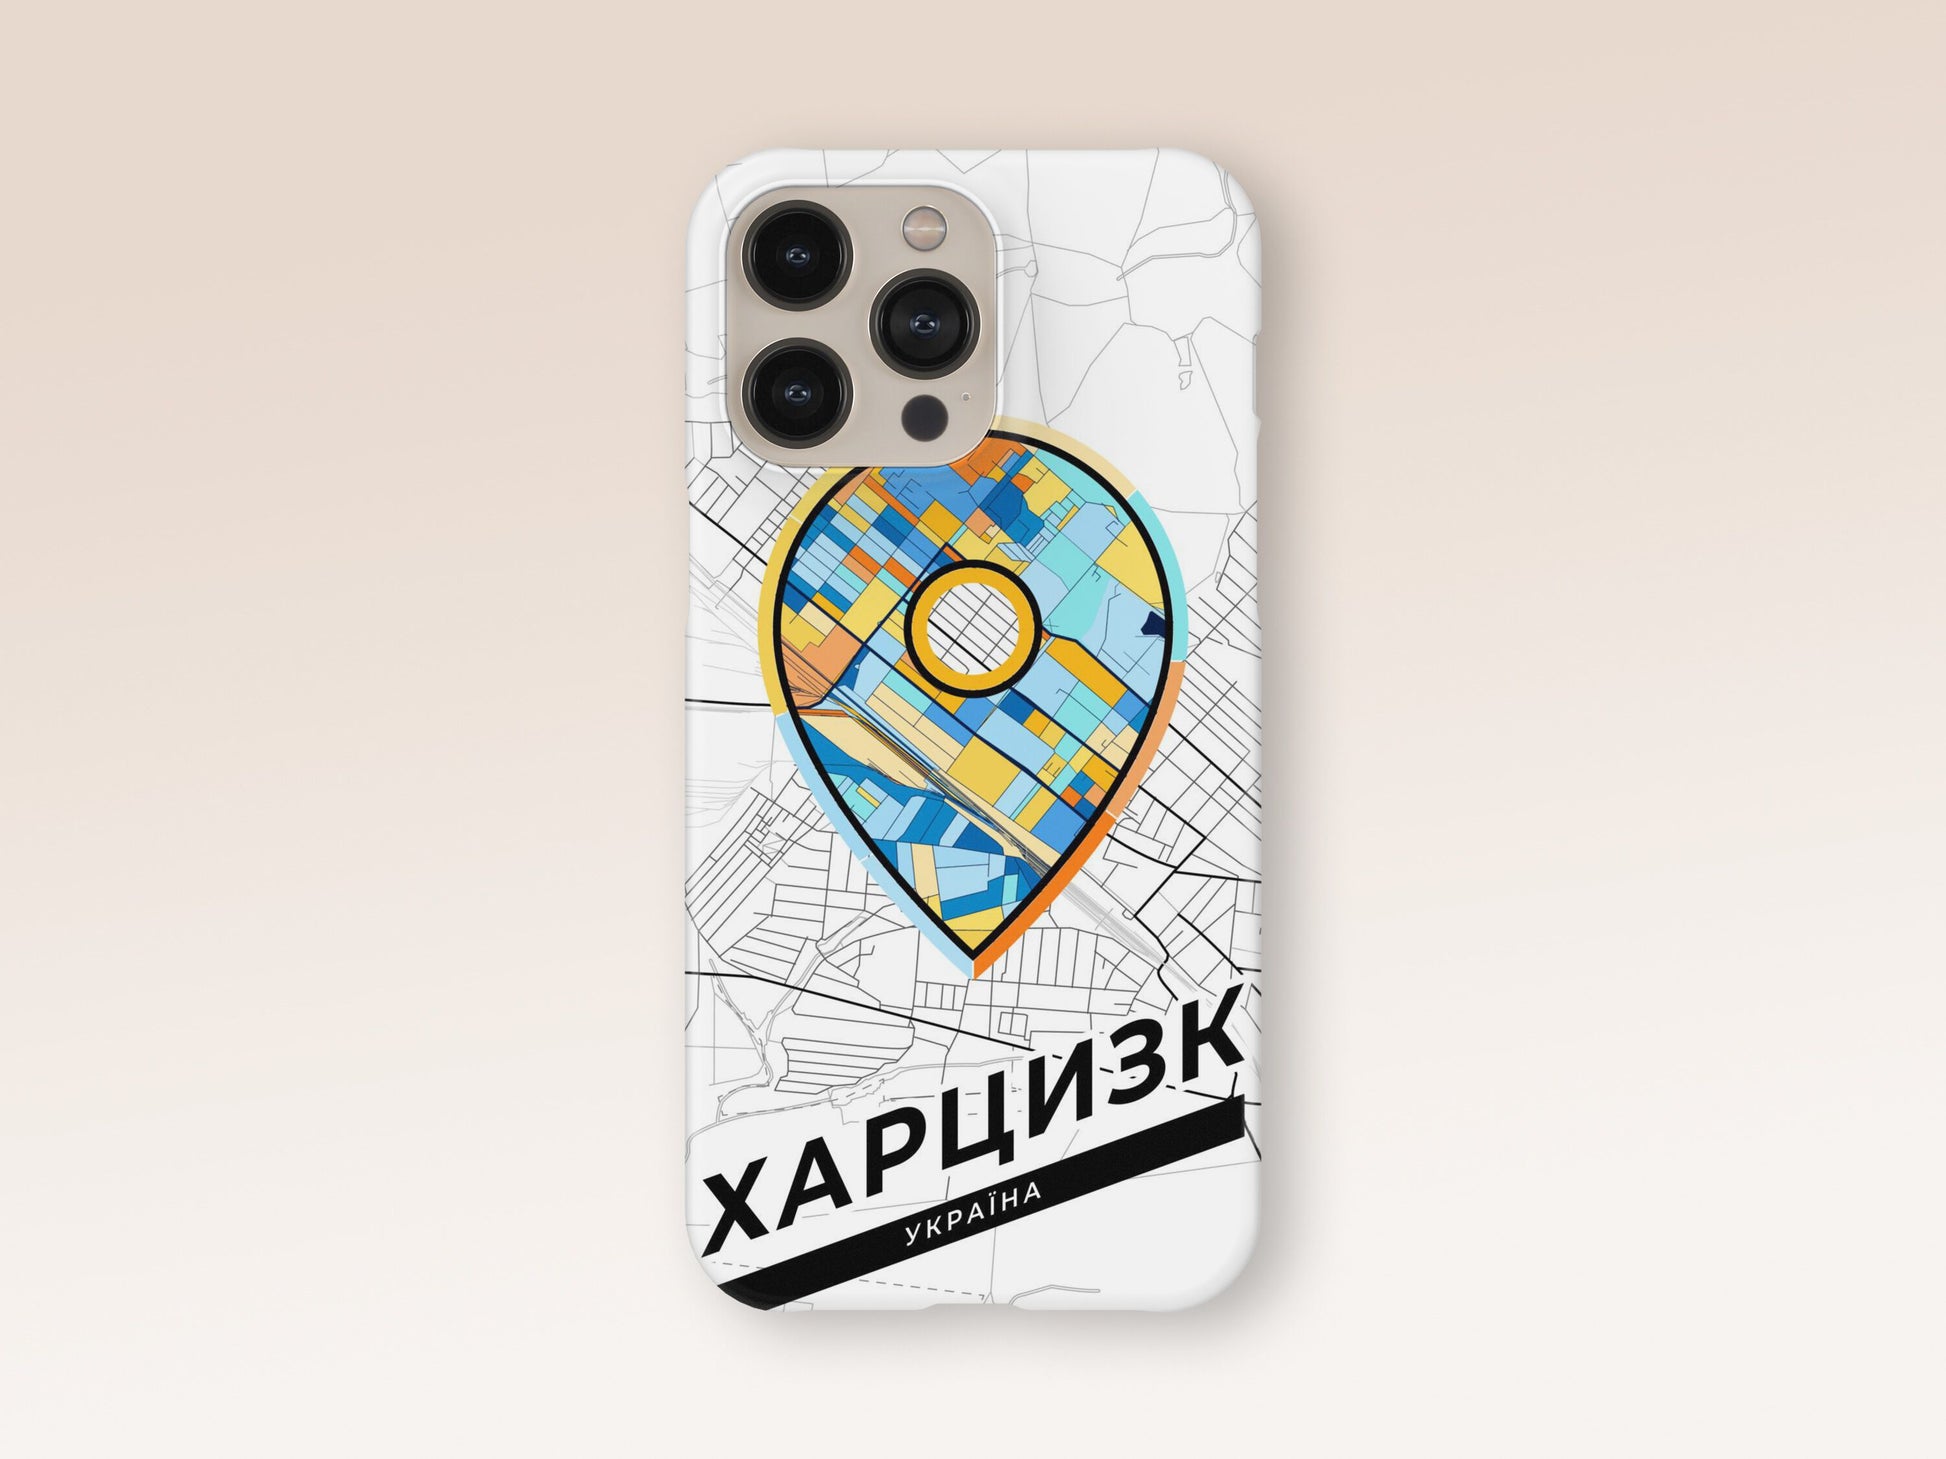 Khartsyzk Ukraine slim phone case with colorful icon. Birthday, wedding or housewarming gift. Couple match cases. 1